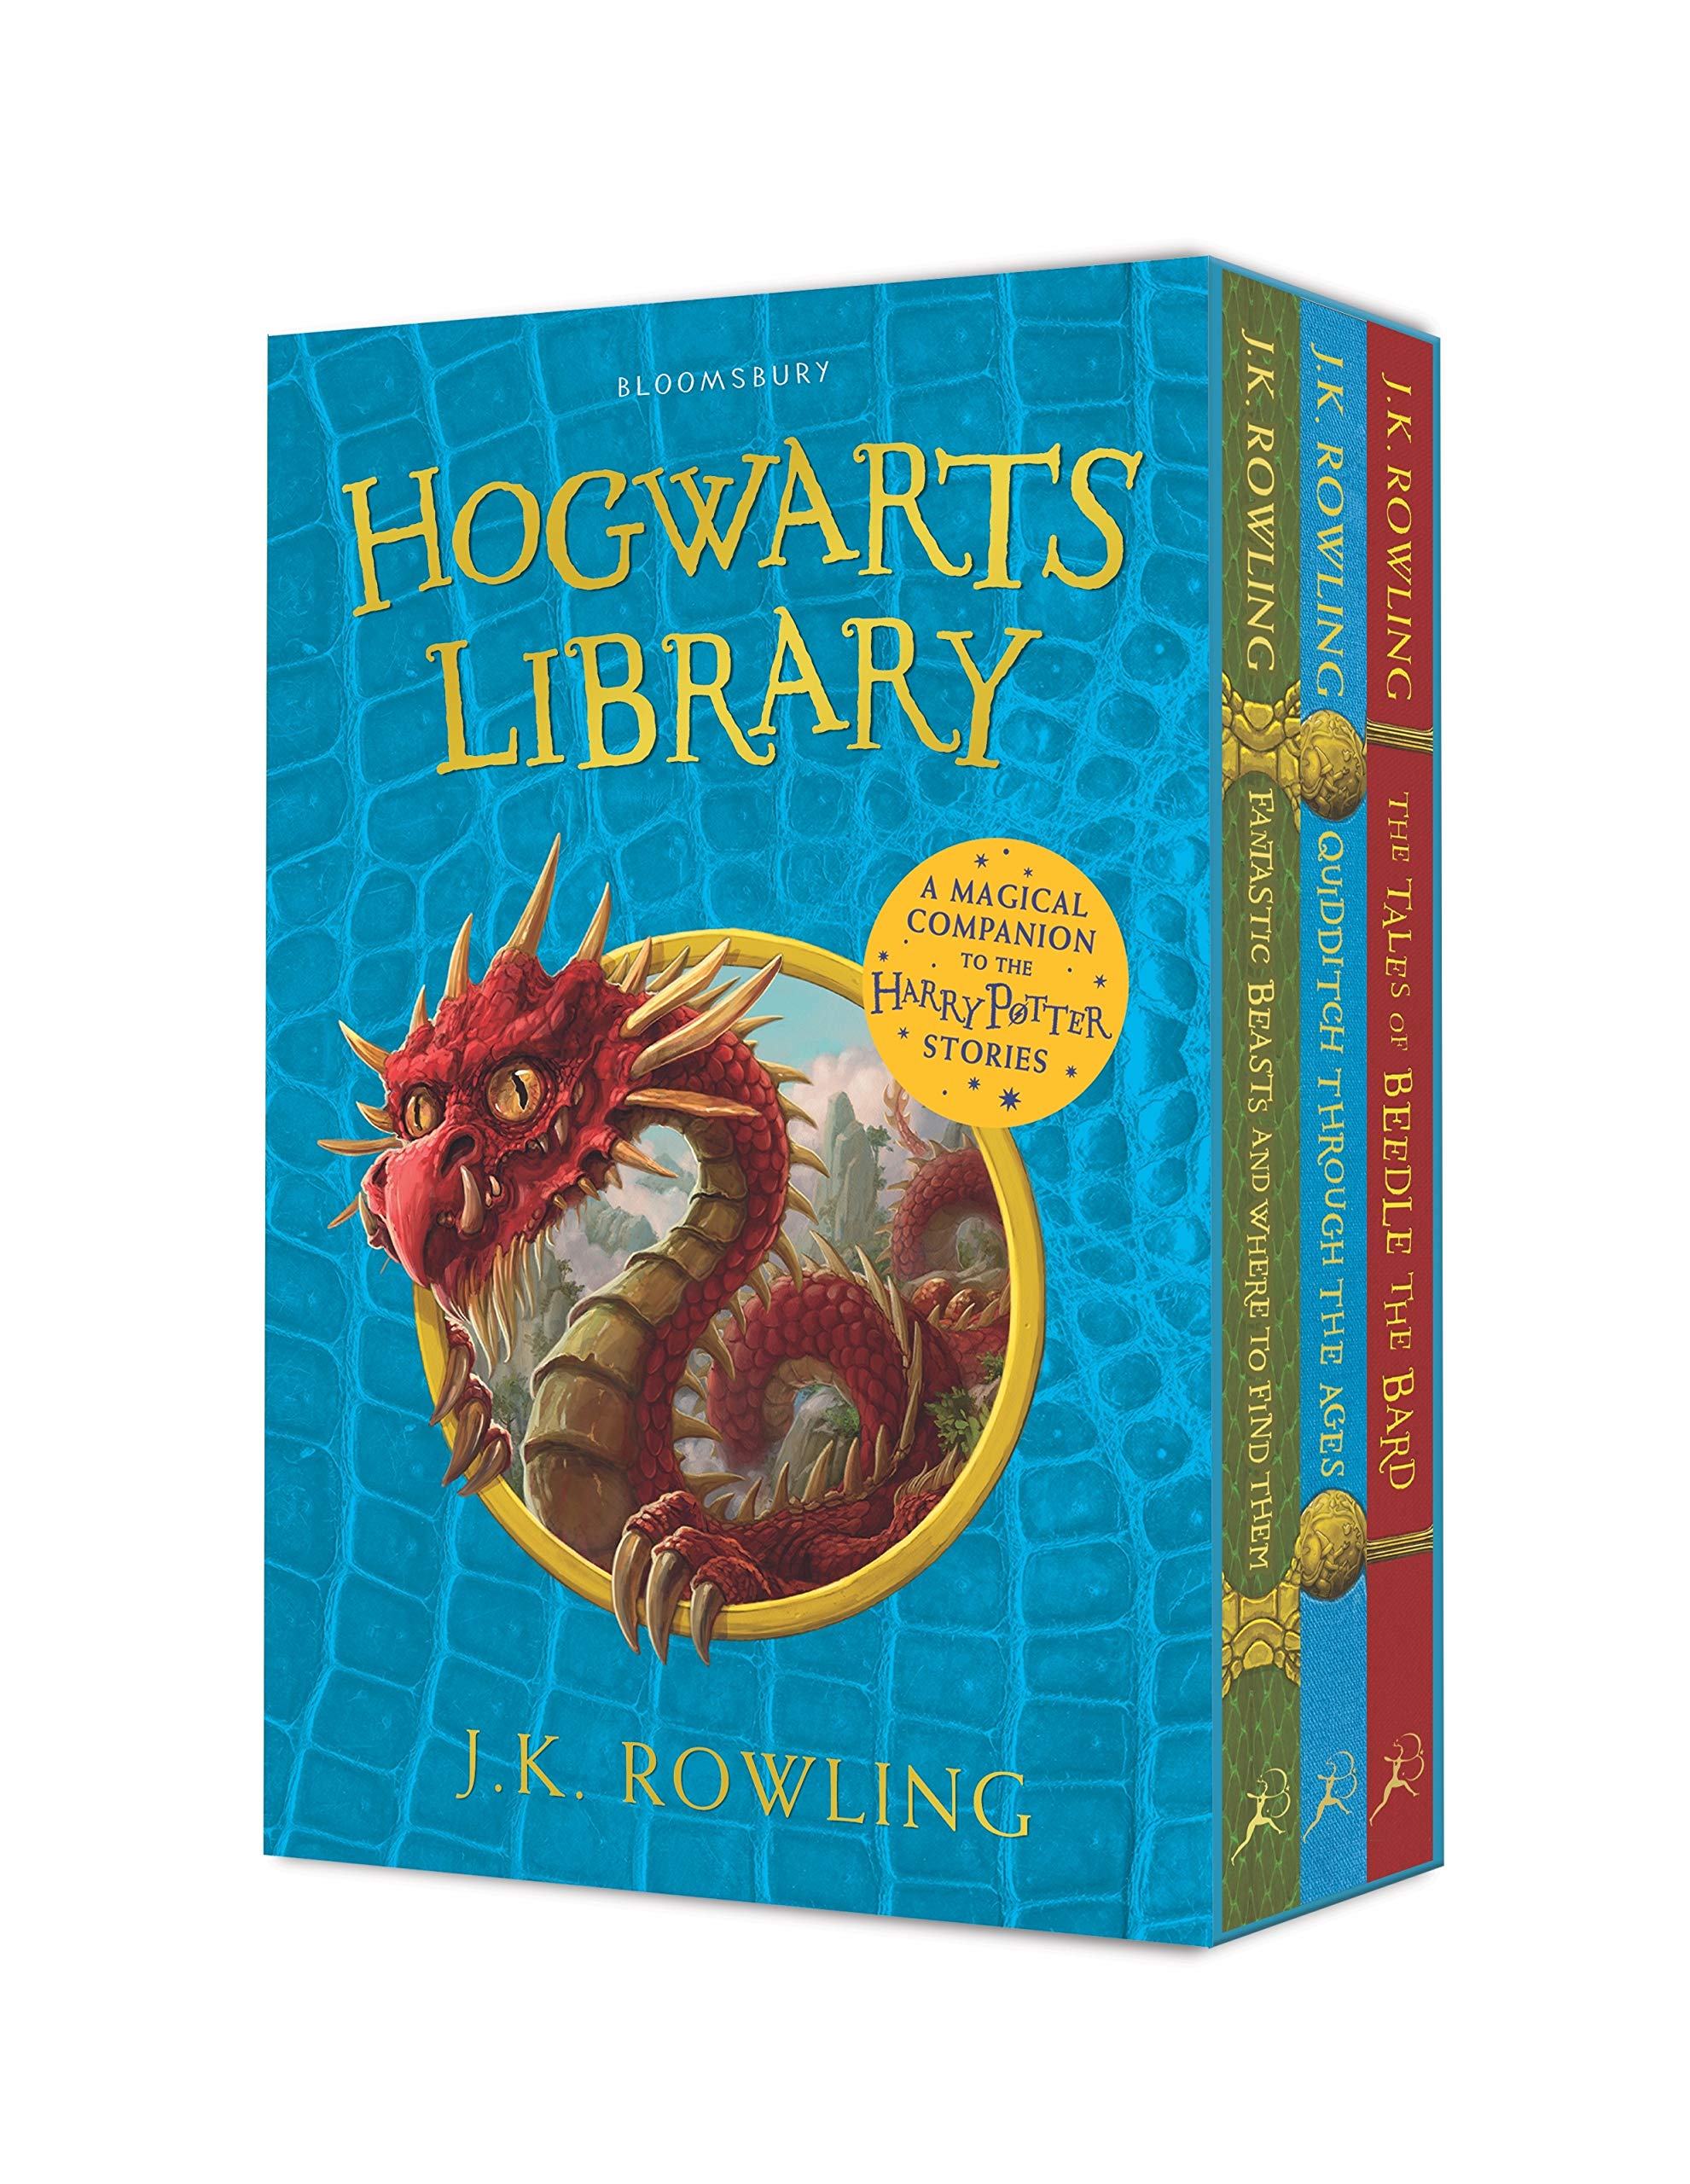 The Hogwarts Library Box Set